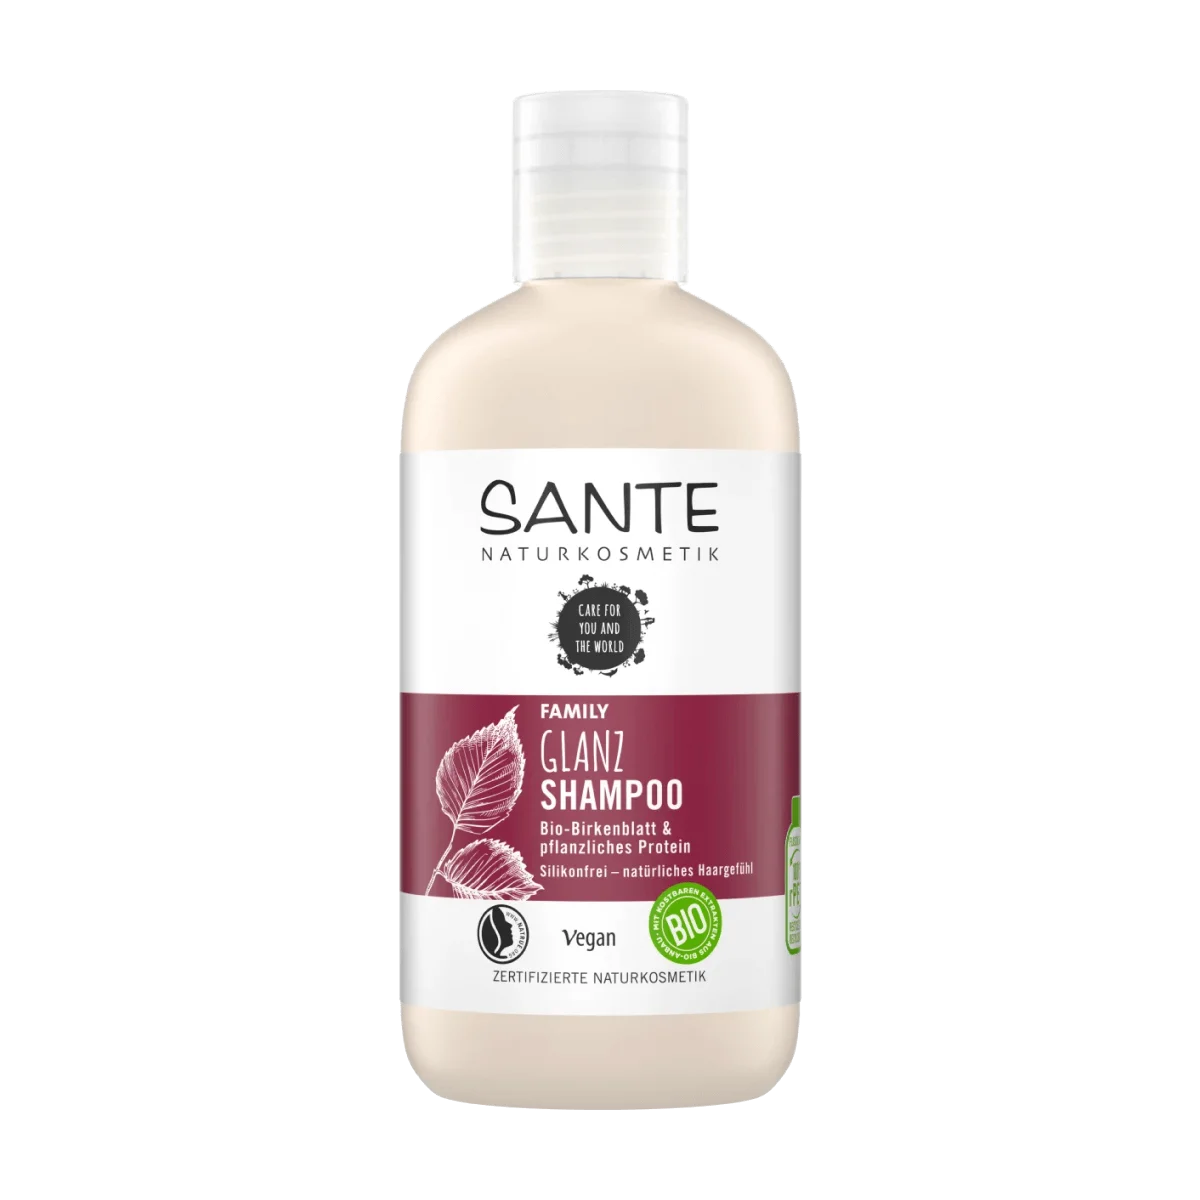 SANTE NATURKOSMETIK Shampoo Glanz Family Bio-Birkenblatt & Pflanzliches Protein, 250 ml